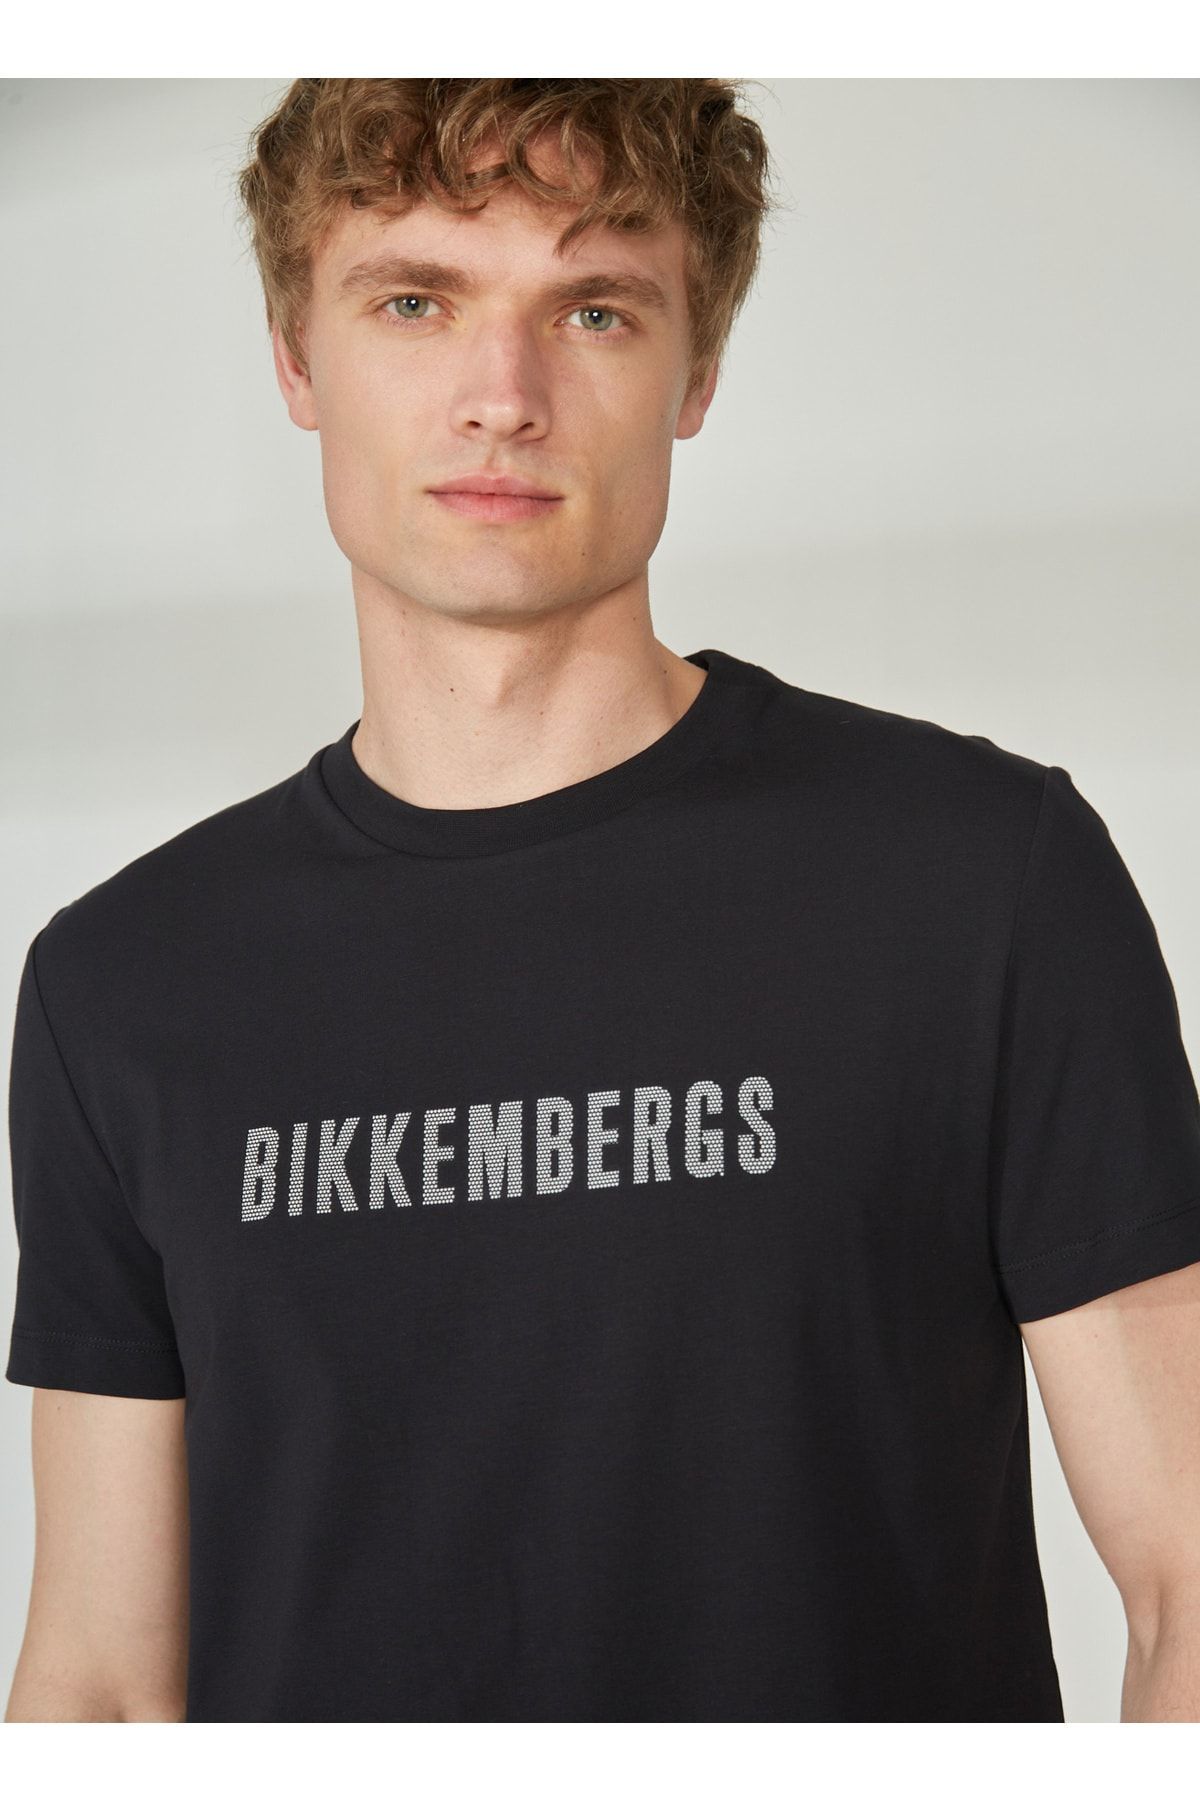 Bikkembergs Siyah Erkek T-Shirt C 4 101 2S